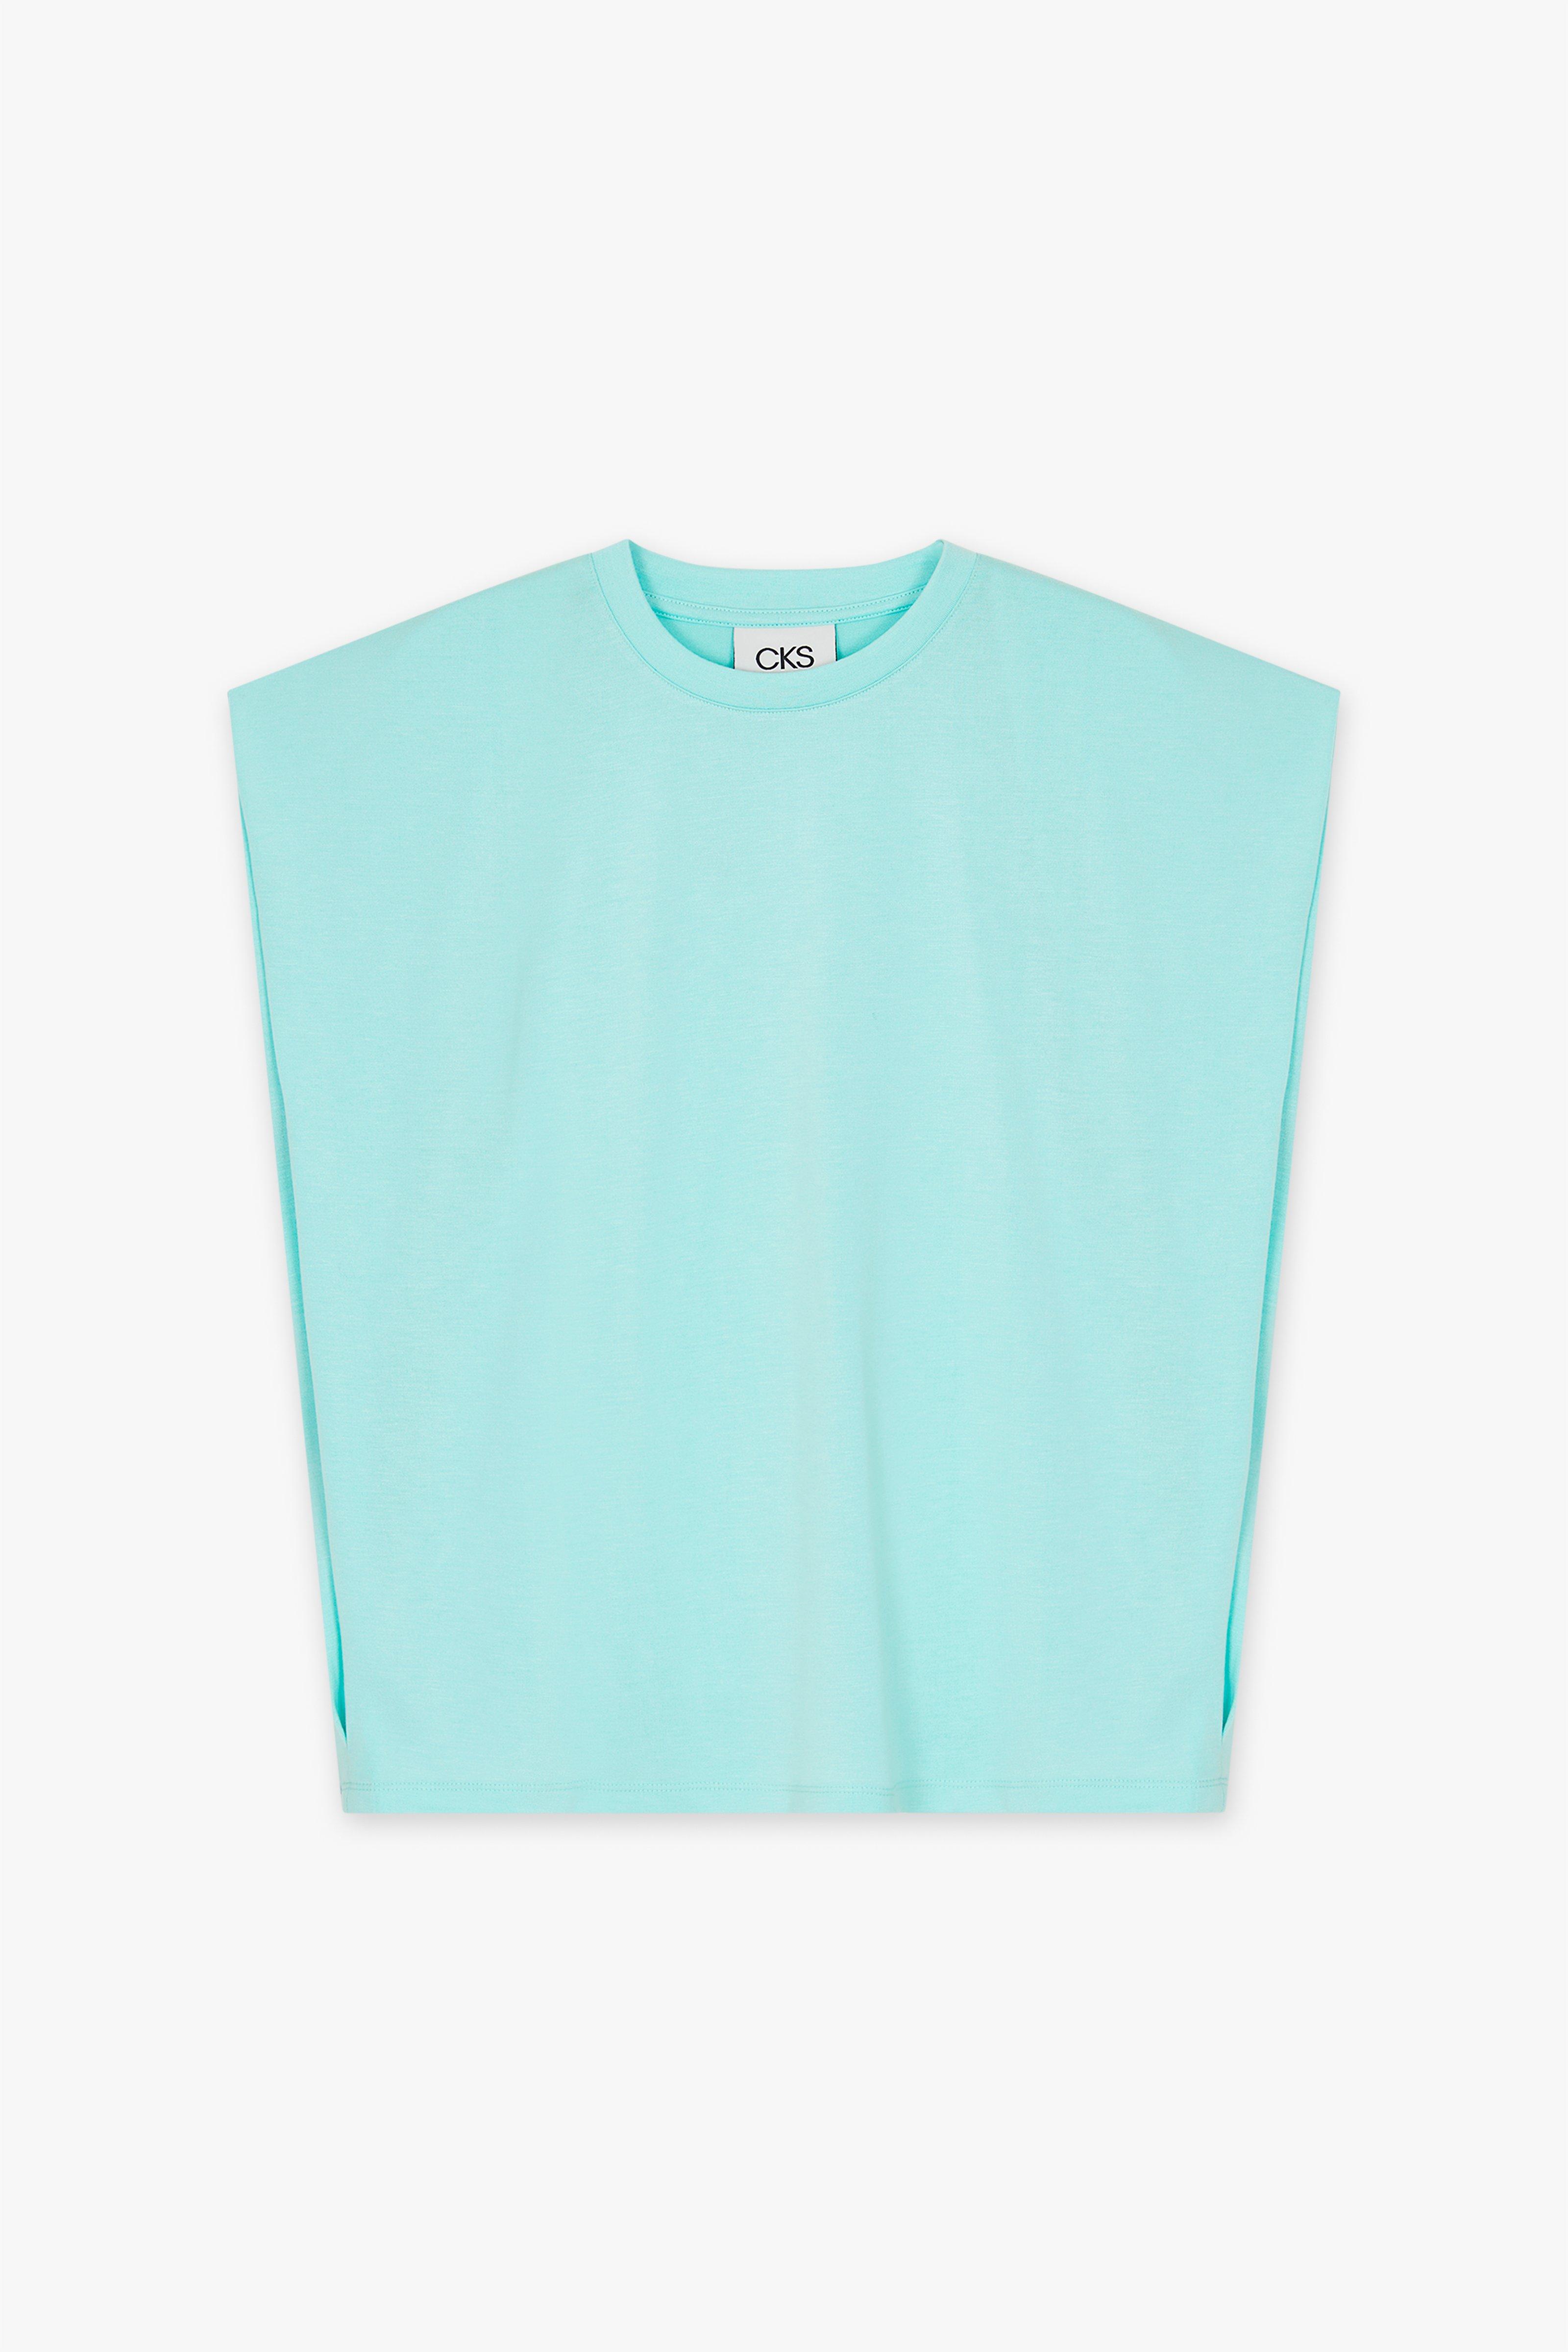 CKS Dames - PLAMINA - t-shirt à manches courtes - bleu clair